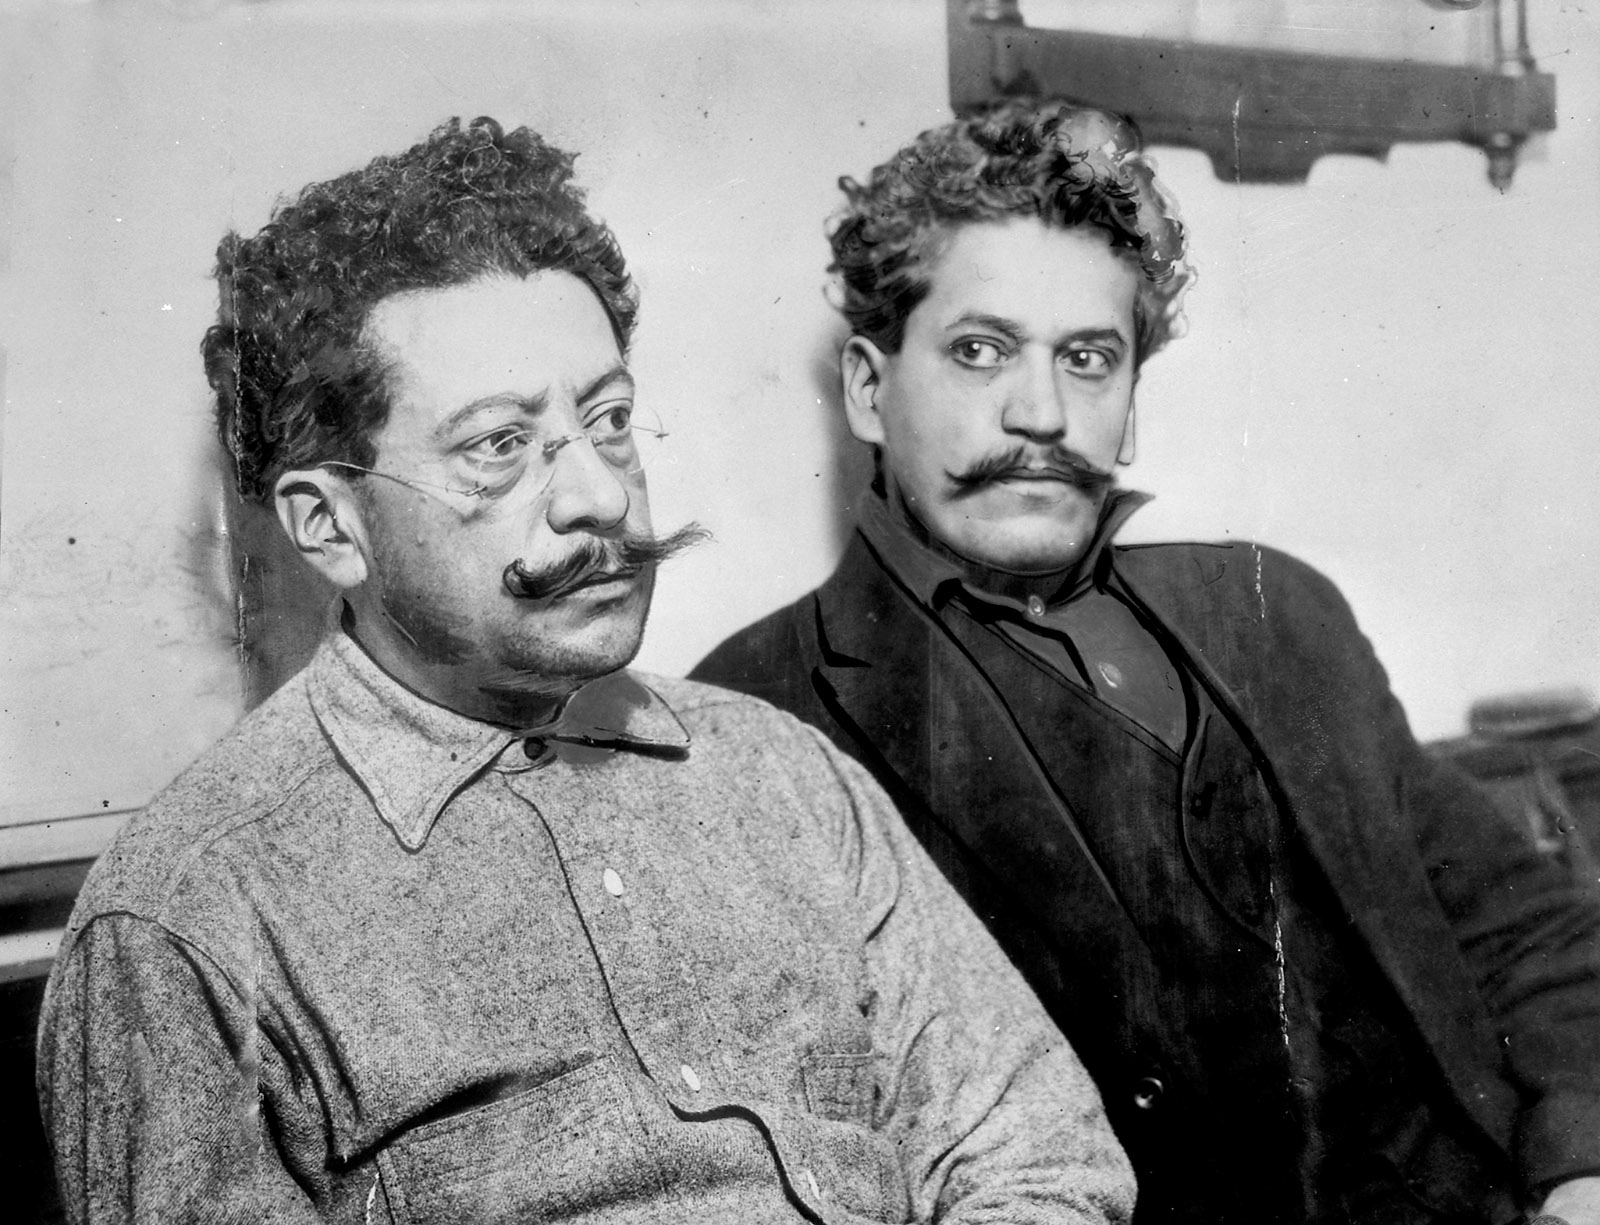 Ricardo and Enrique Flores Magón at the Los Angeles County Jail, circa 1916